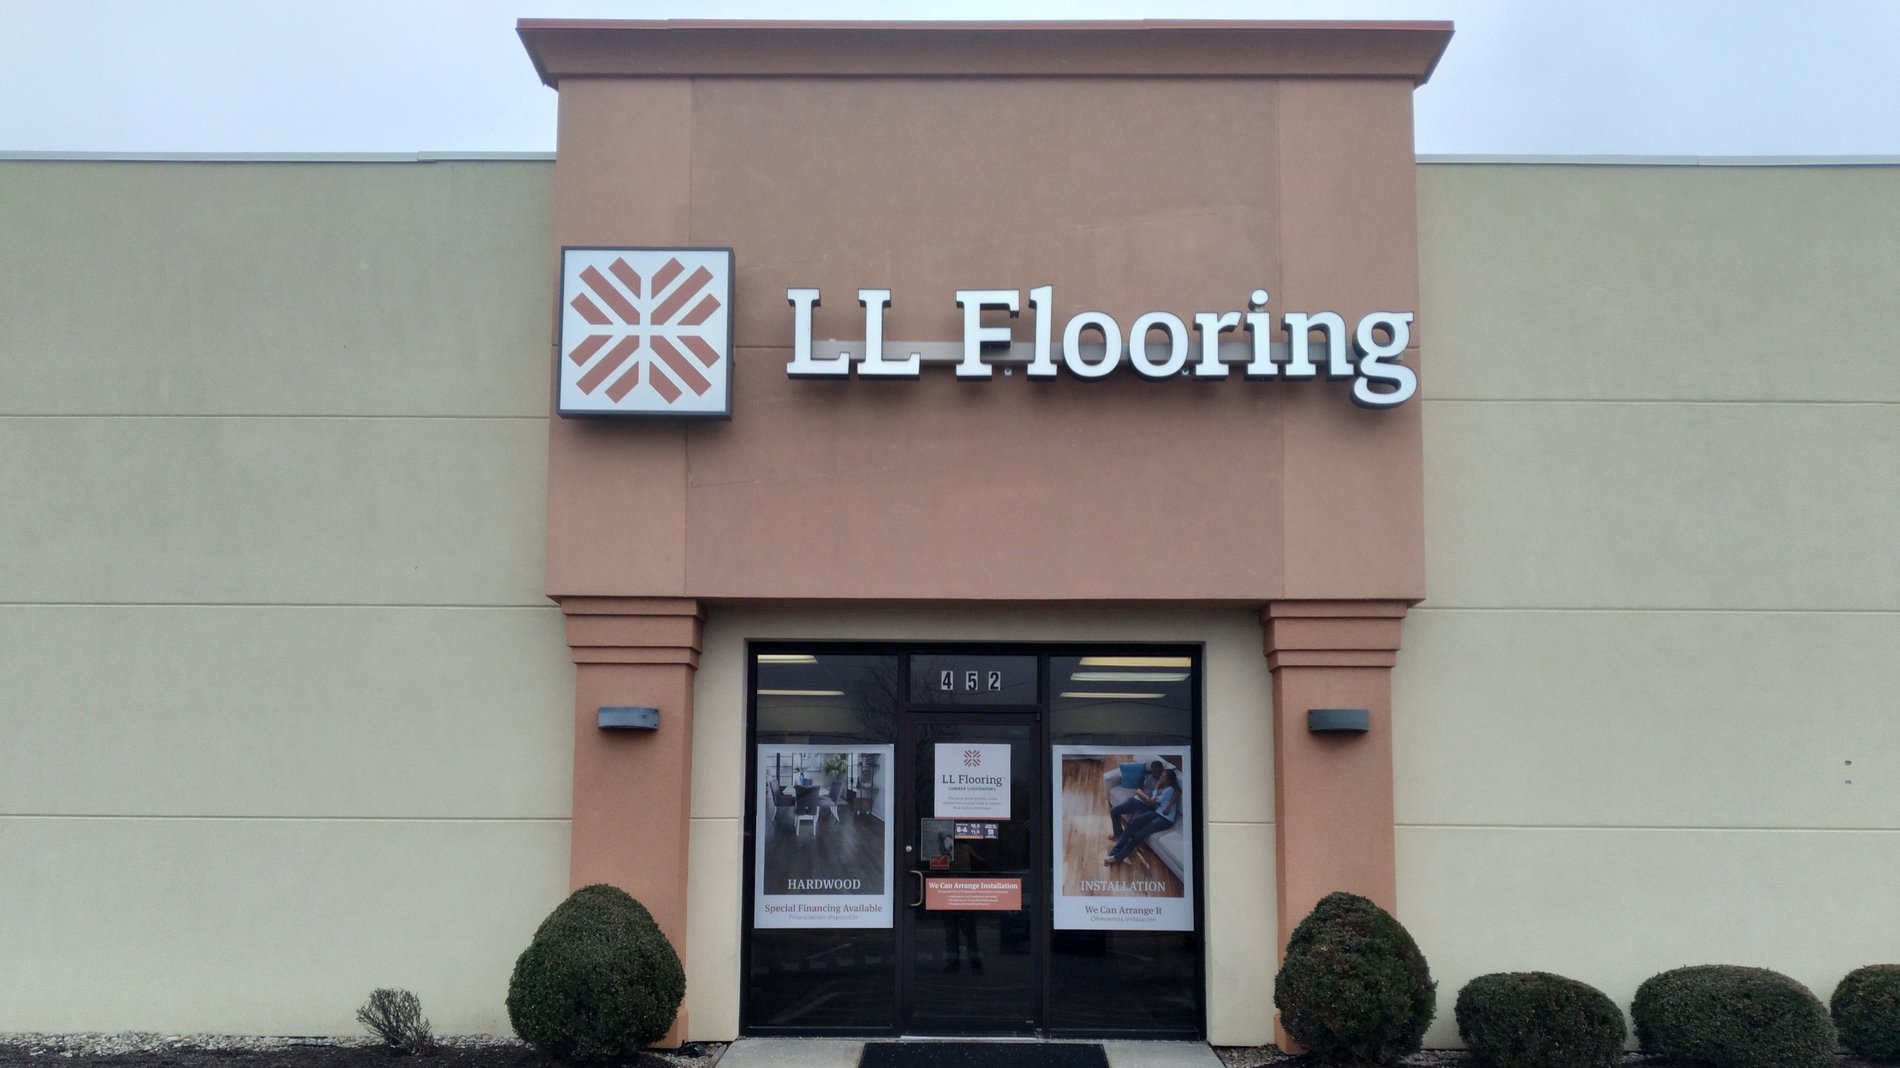 LL Flooring #1114 Dayton | 452 Springboro Pike | Storefront